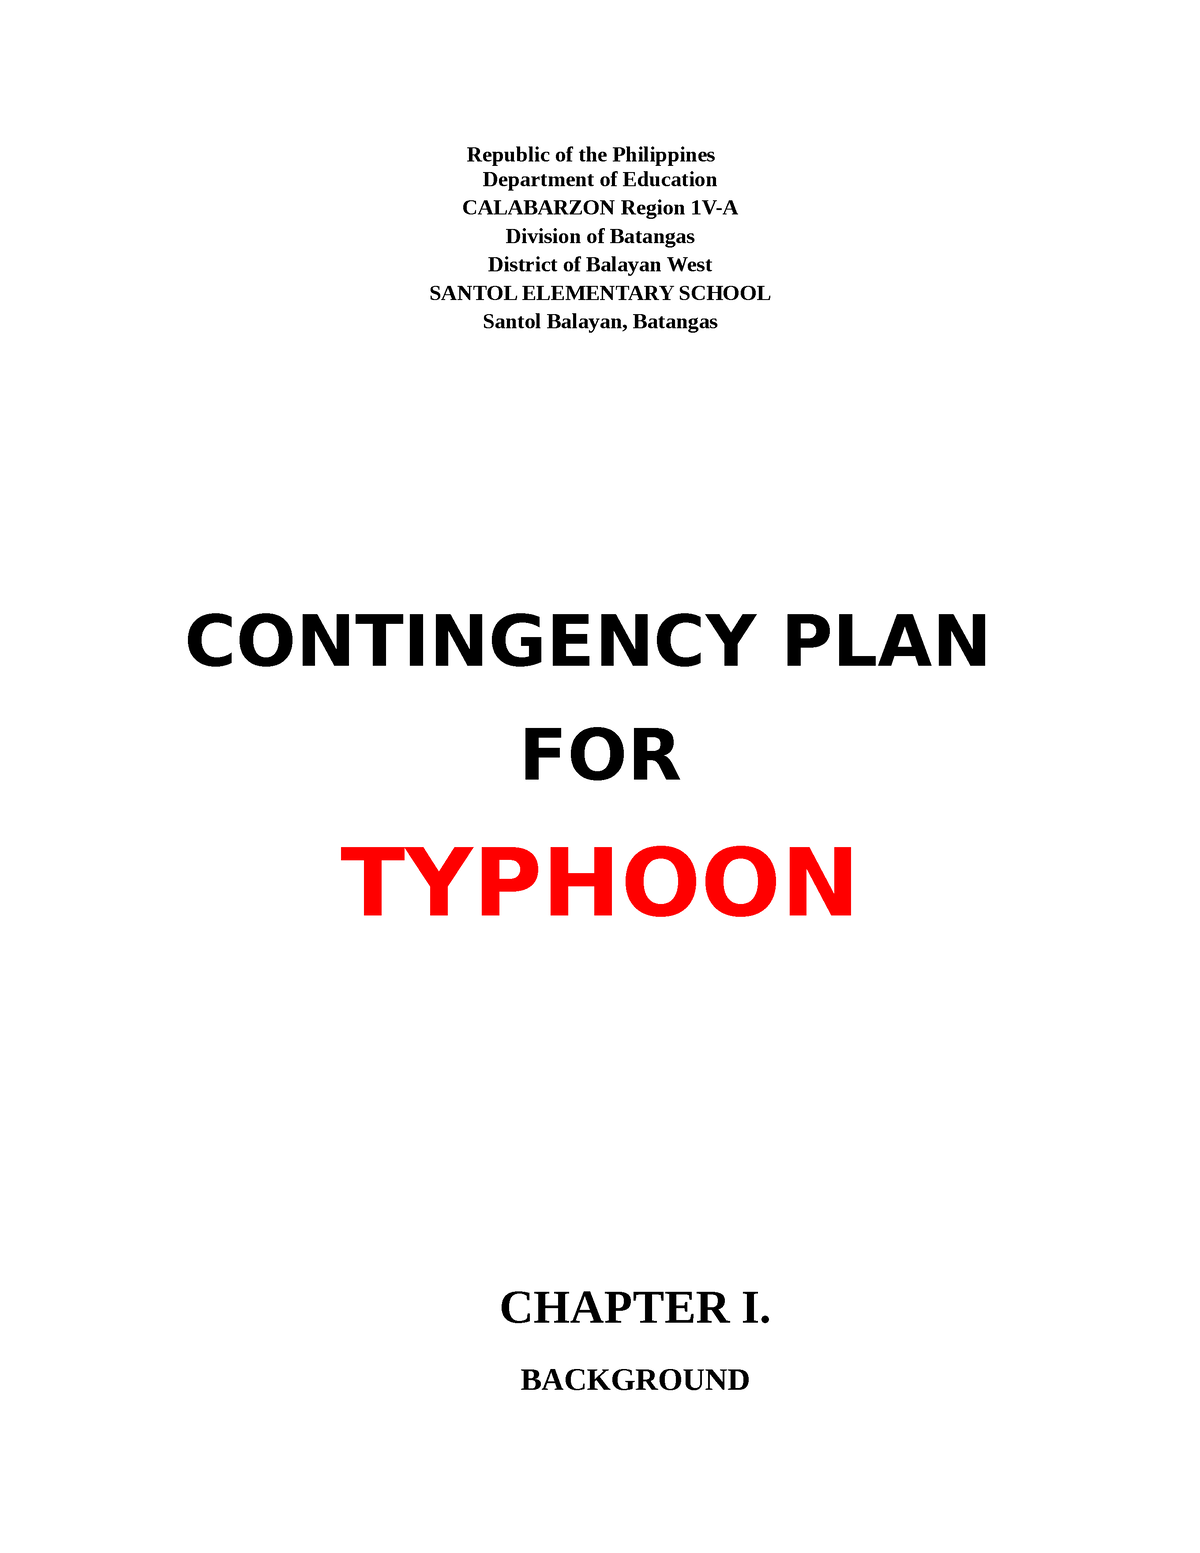 contingency-plan-typhoon-santol-republic-of-the-philippines